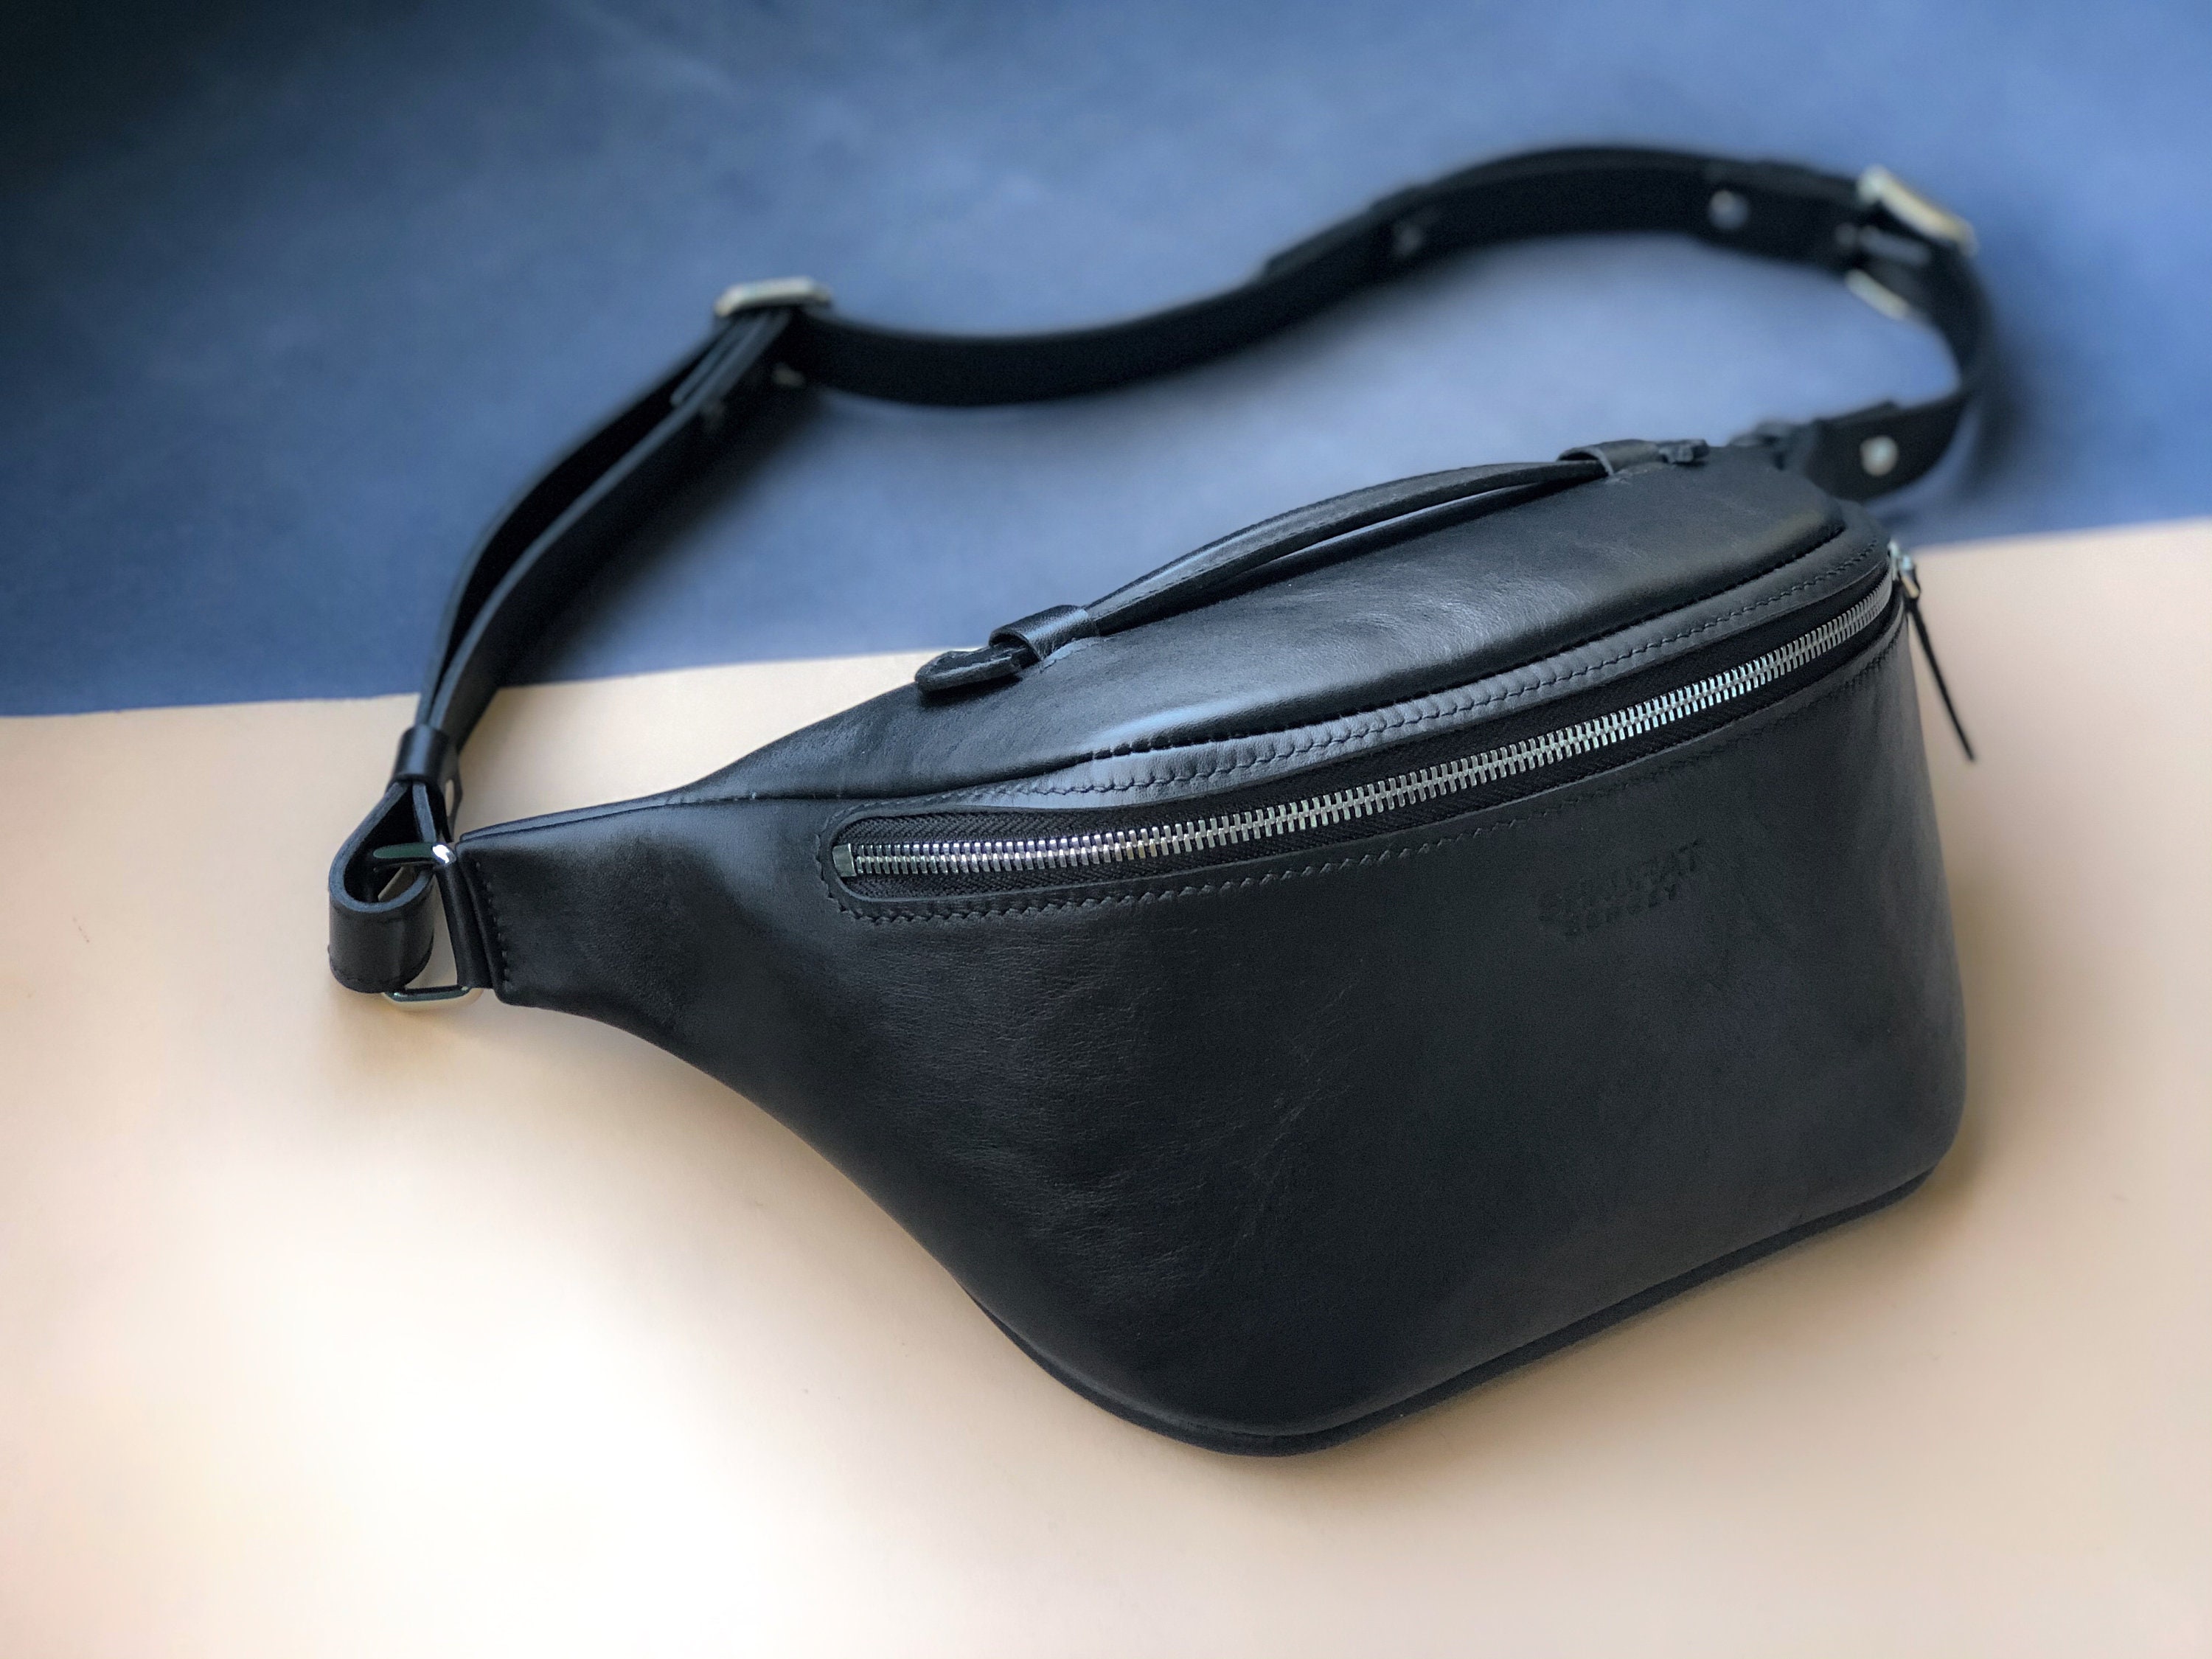 Black crossbody fanny pack. Large leather fanny pack | Etsy